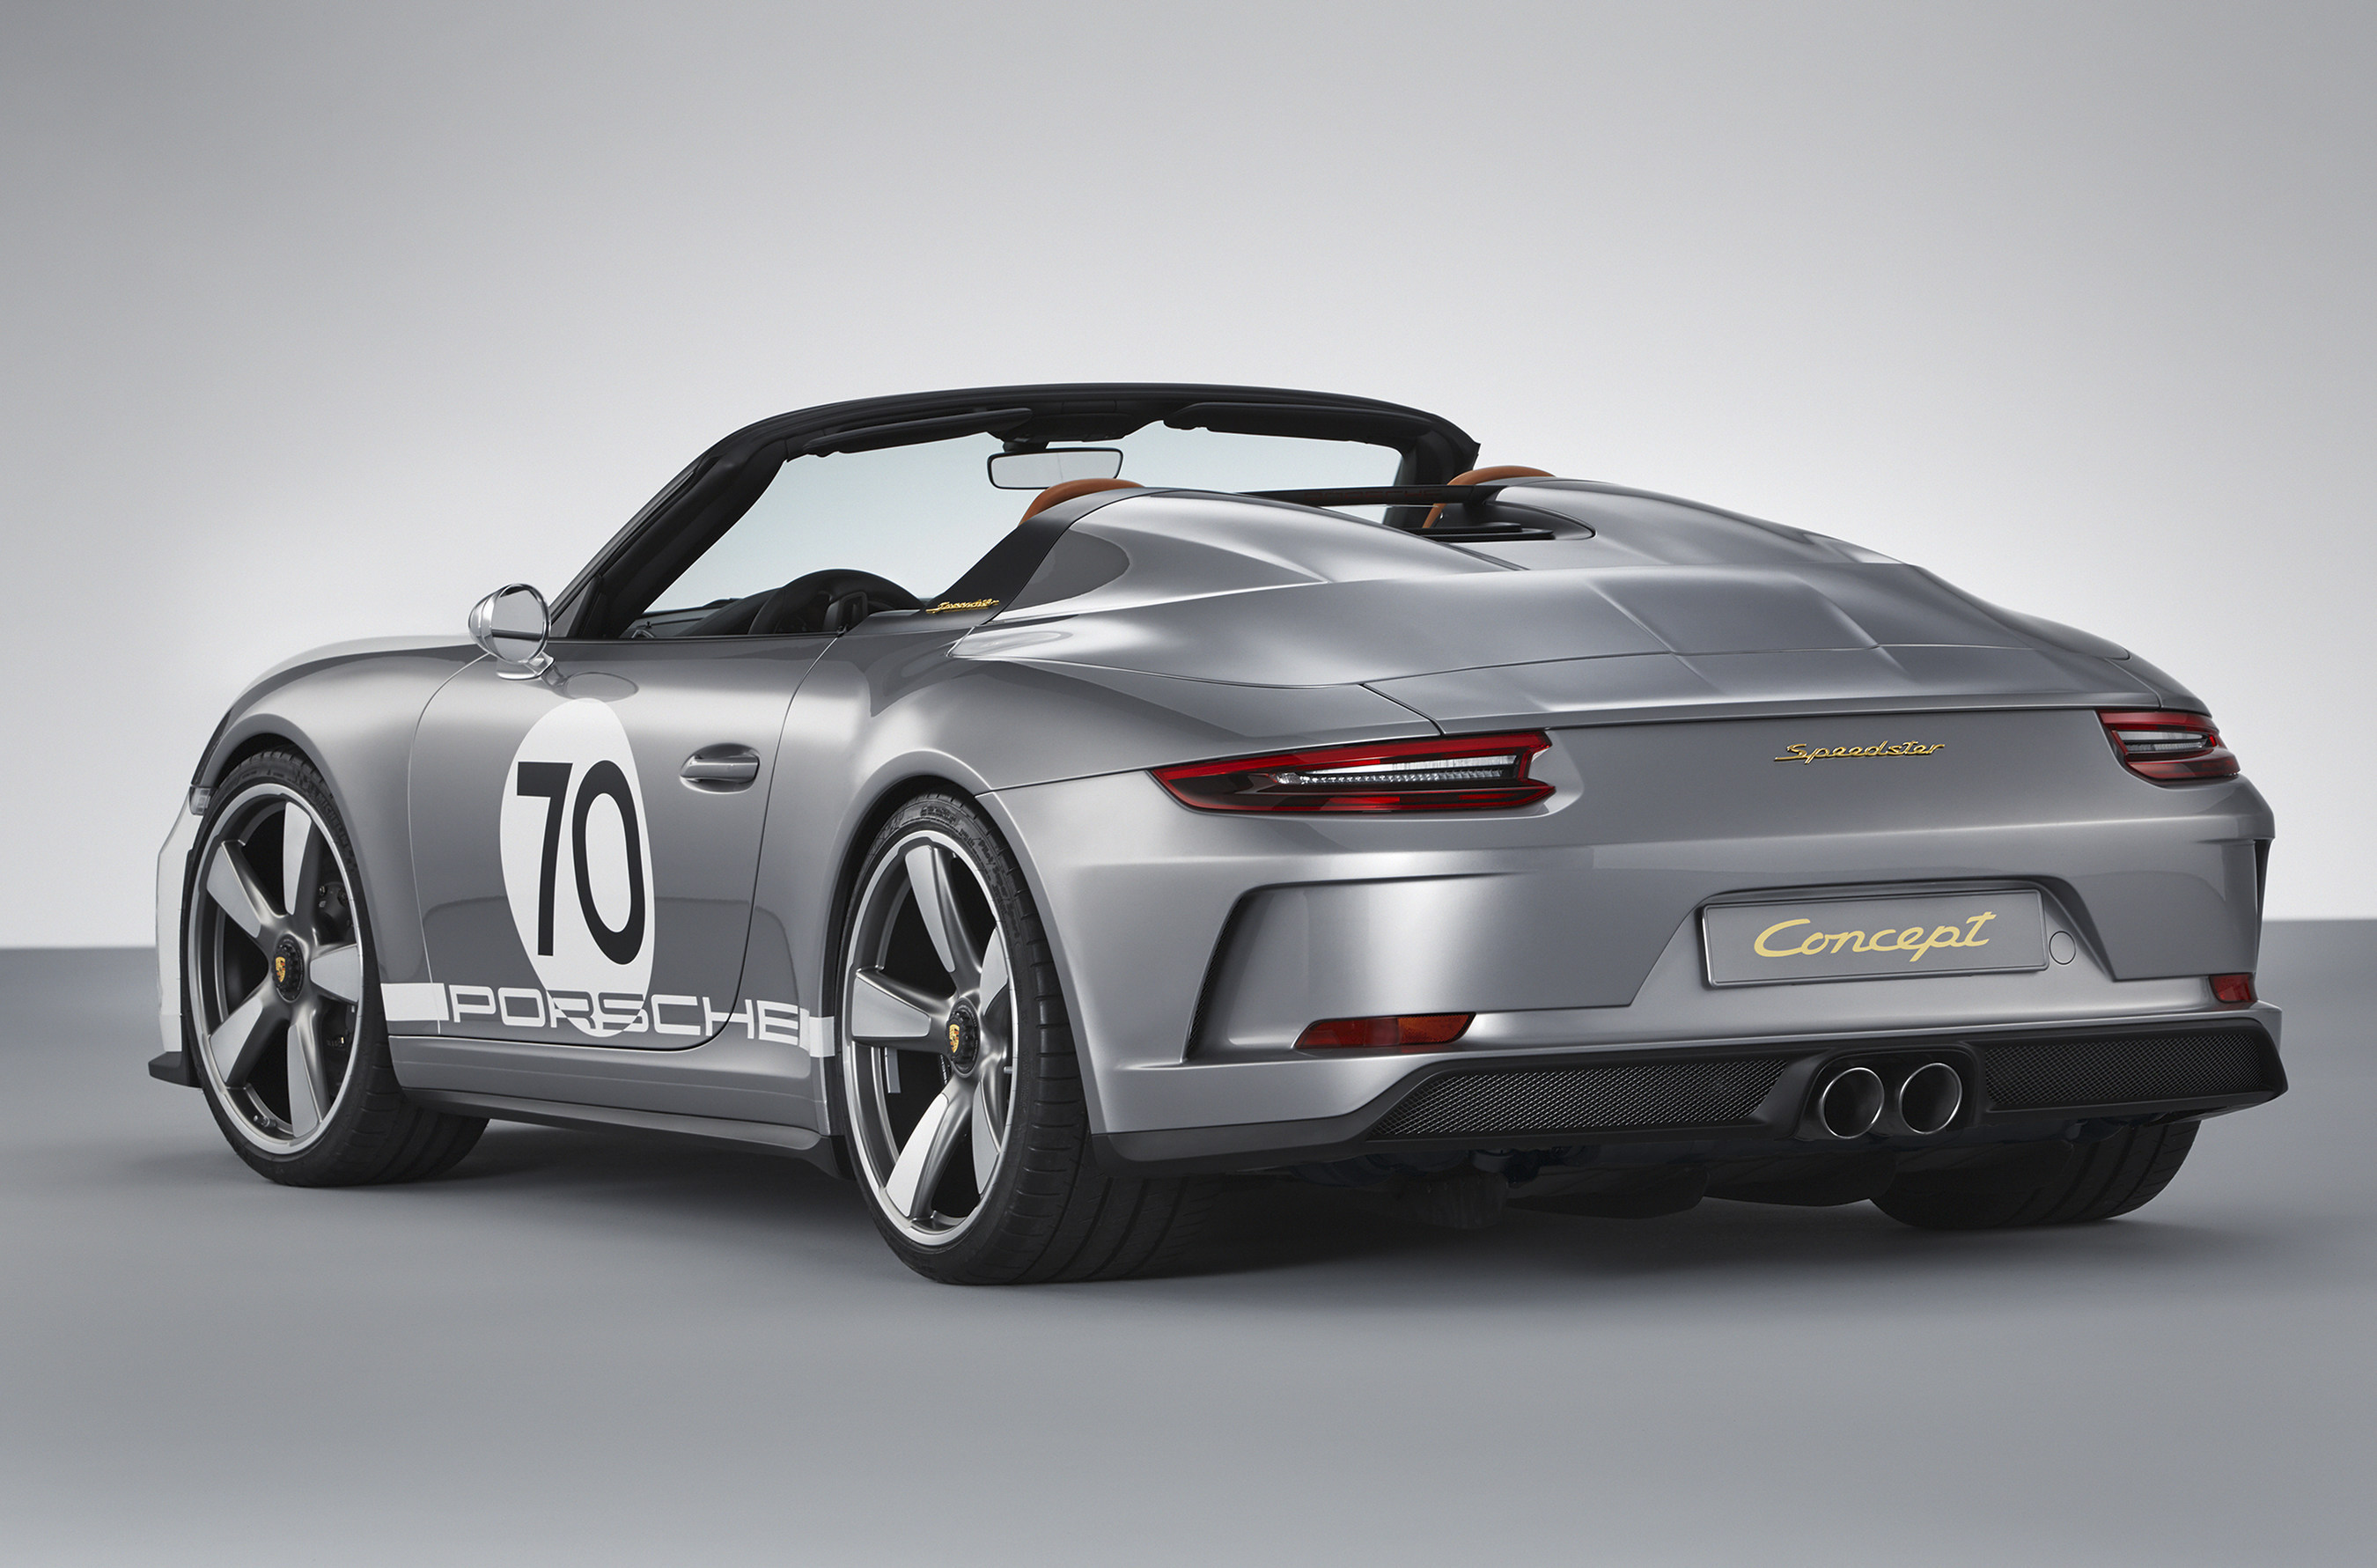 Porsche Cars North America 911 Speedster Concept